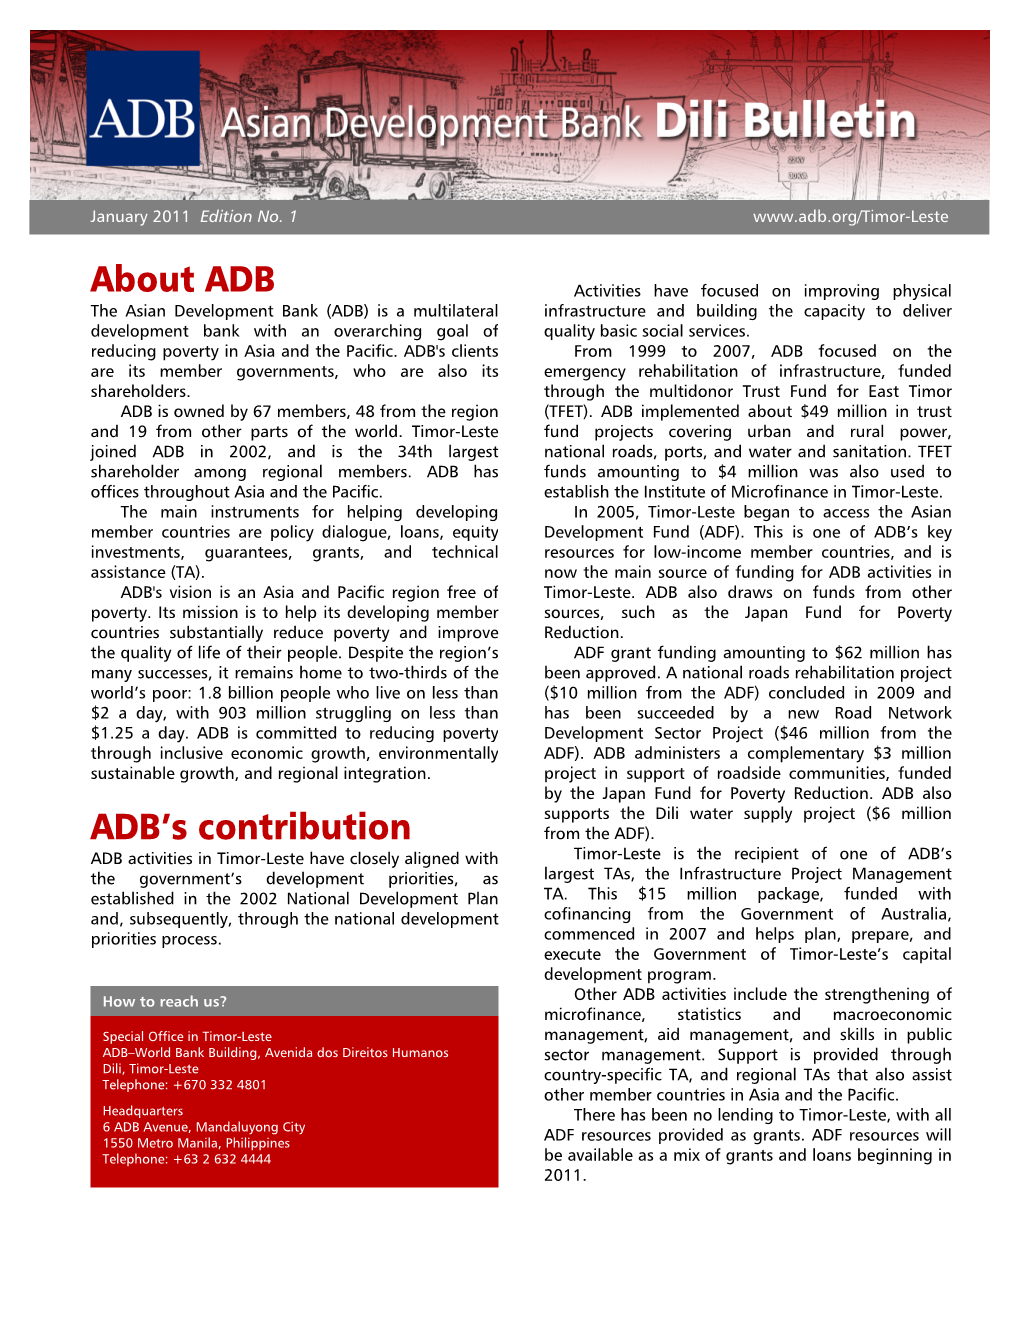 Dili Bulletin: ADB and Timor-Leste